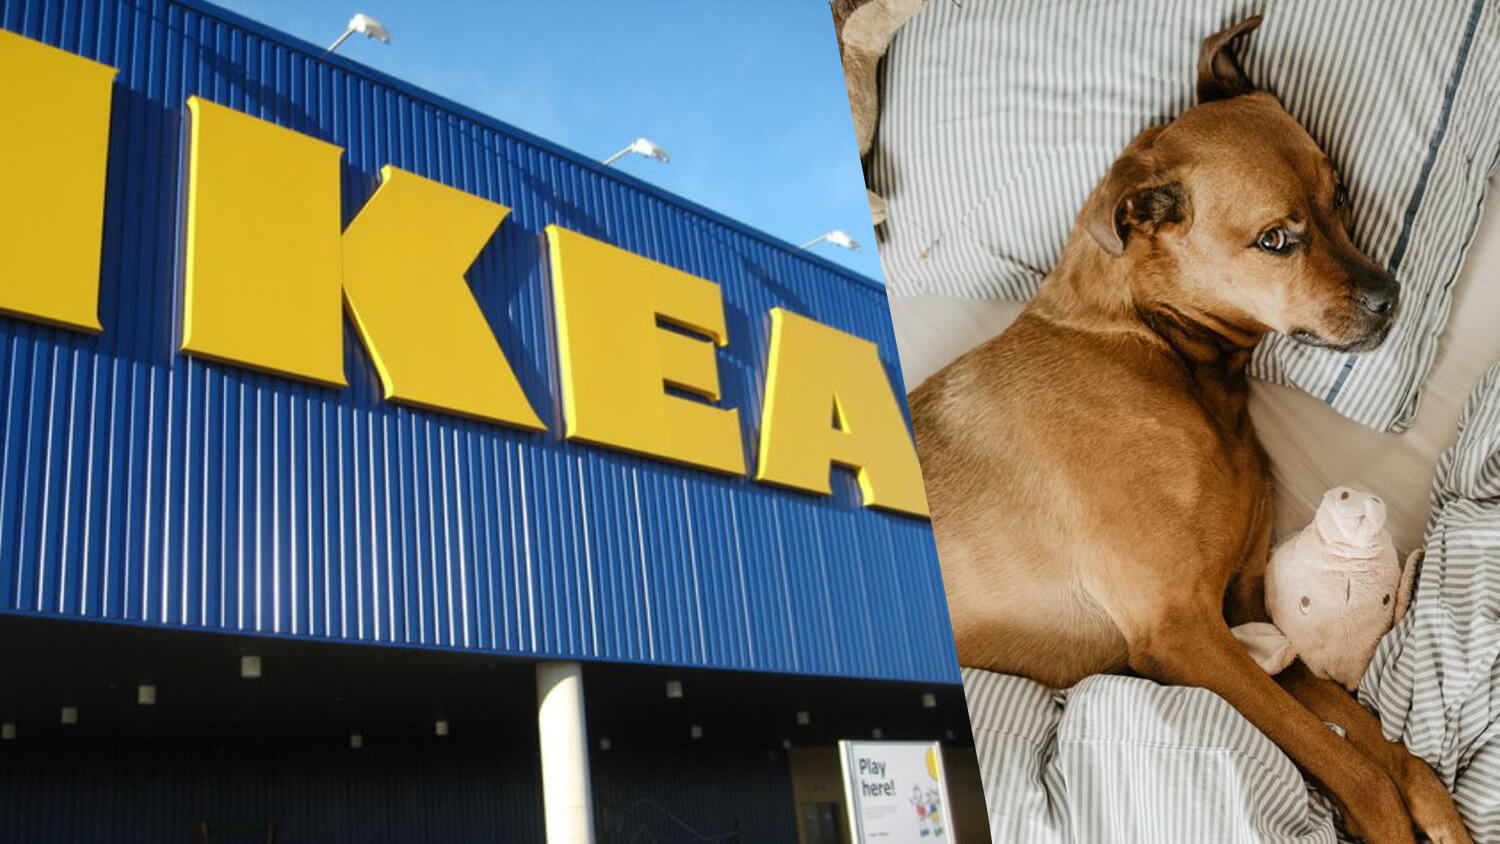 Italian IKEA Location Lets Stray Dogs Live Inside